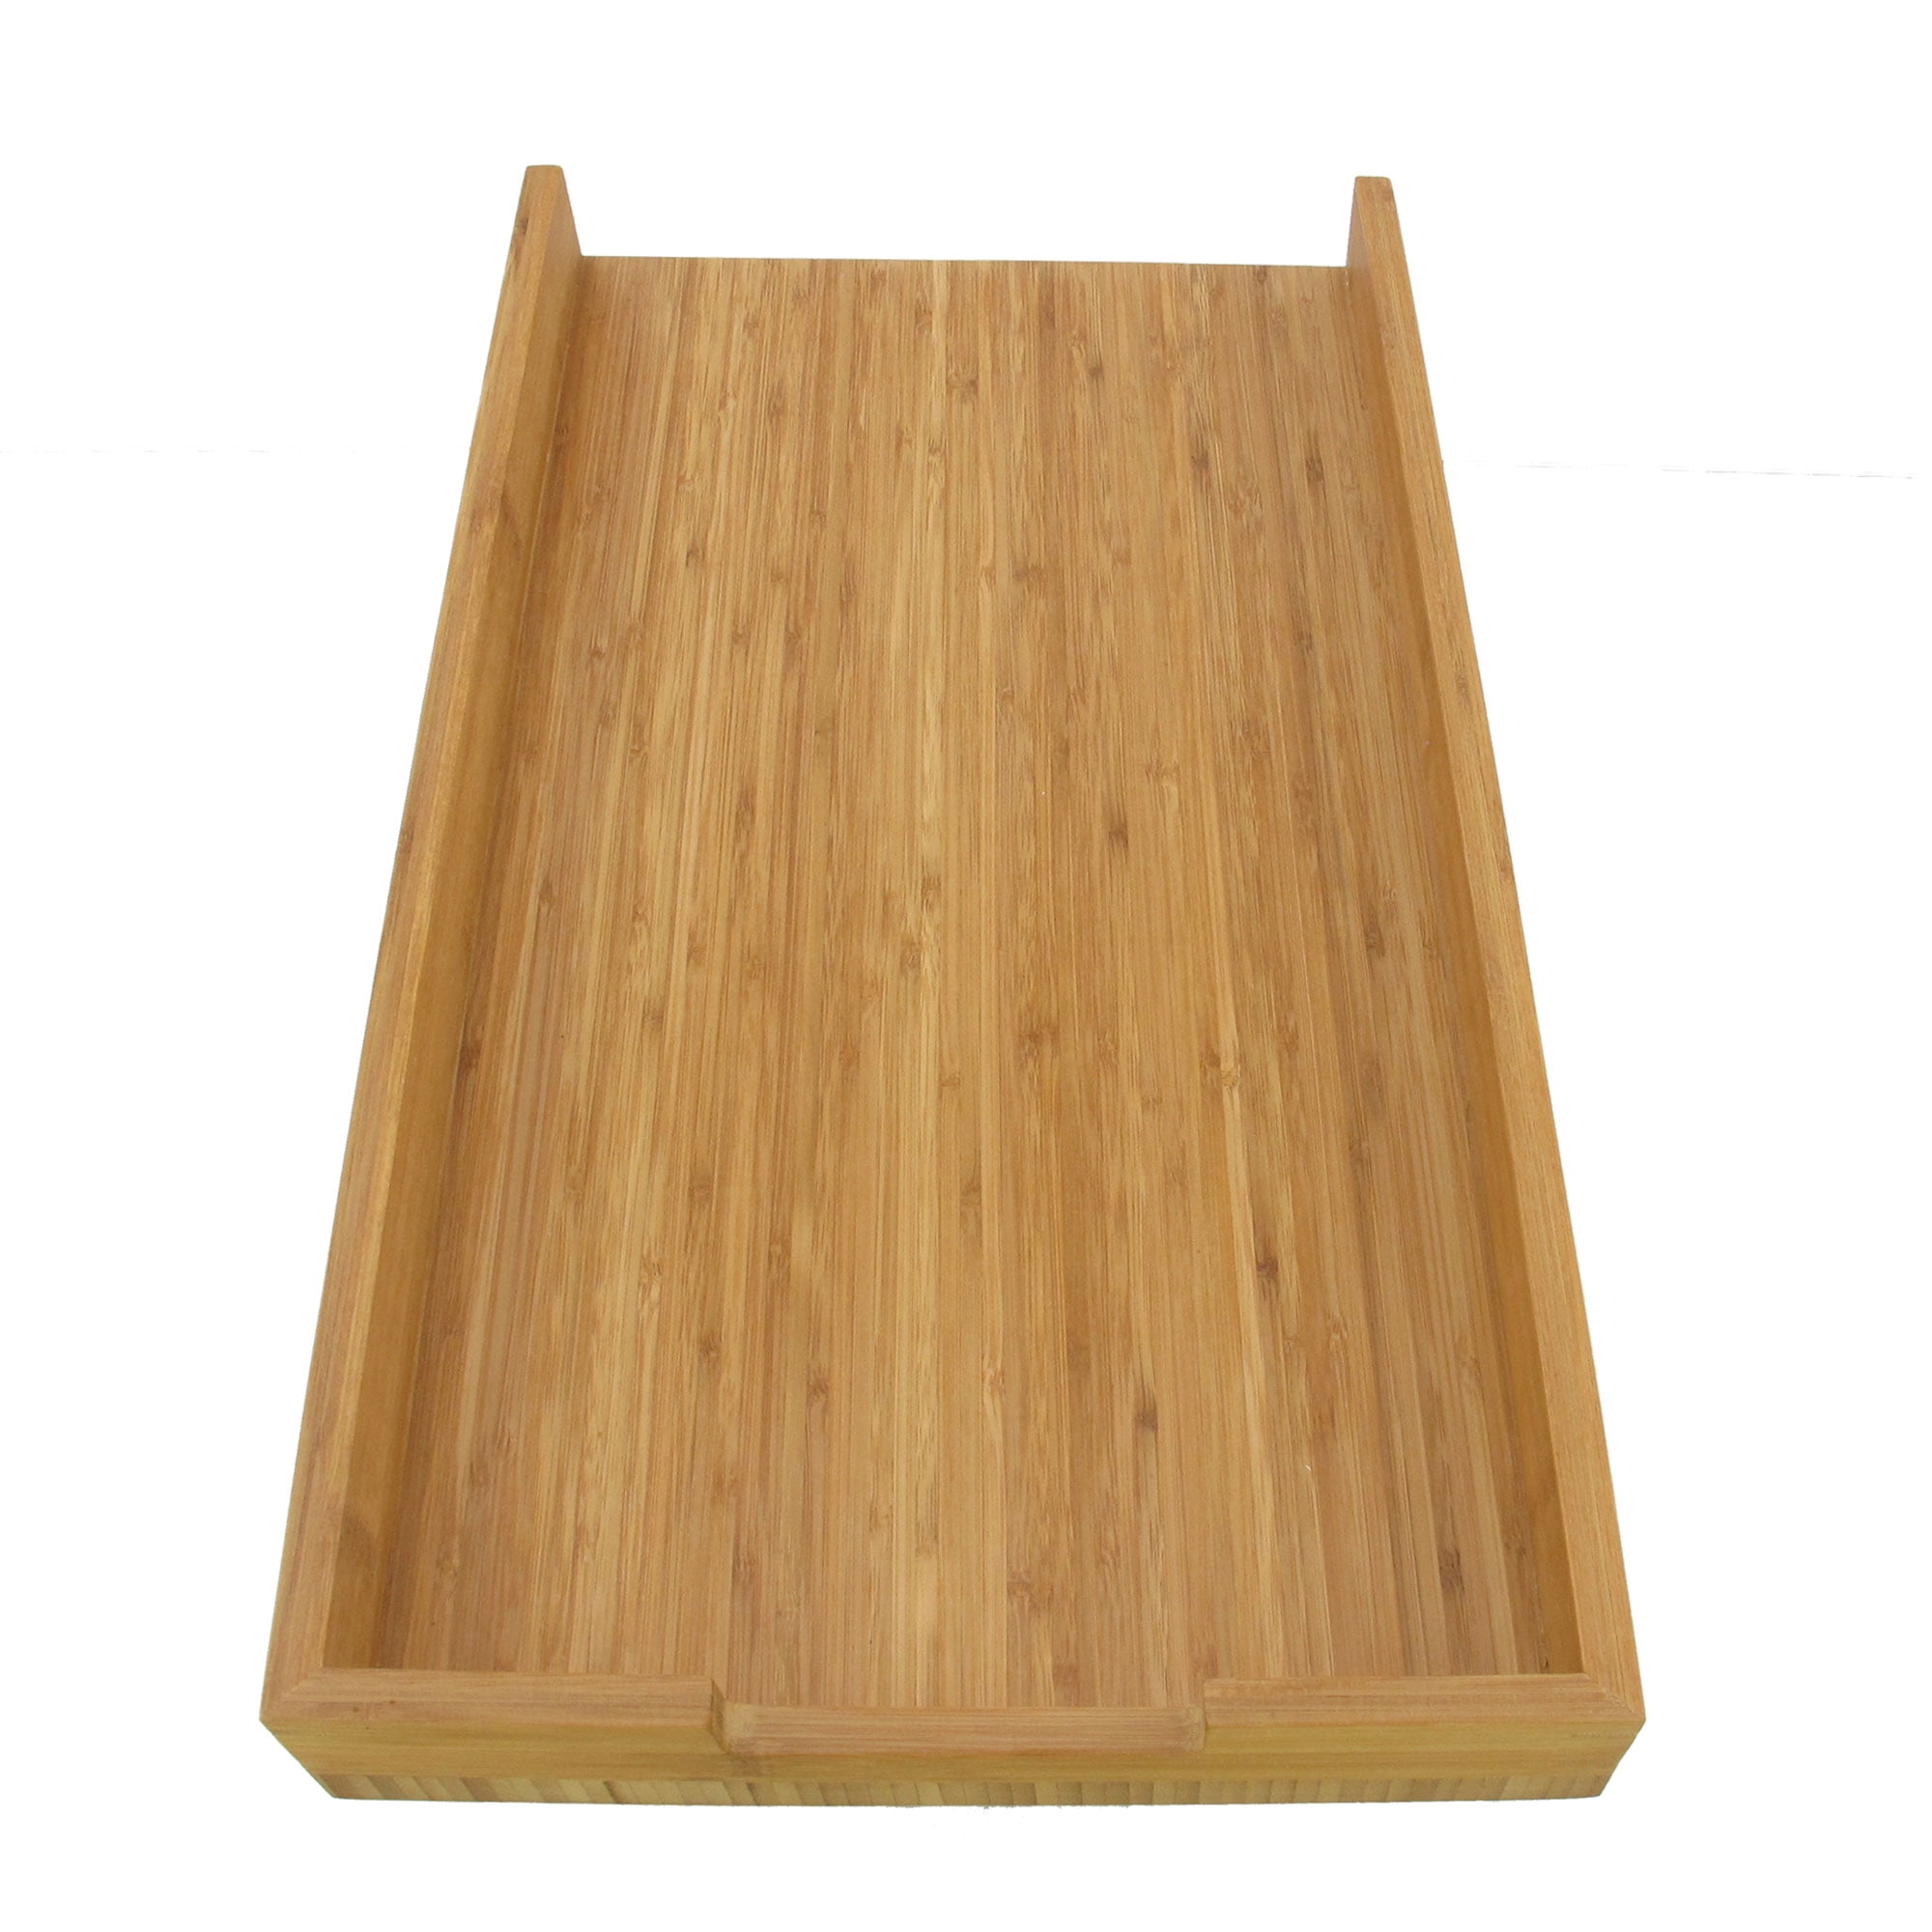 Cuisinart 15-in. Rubberwood Cutting Board